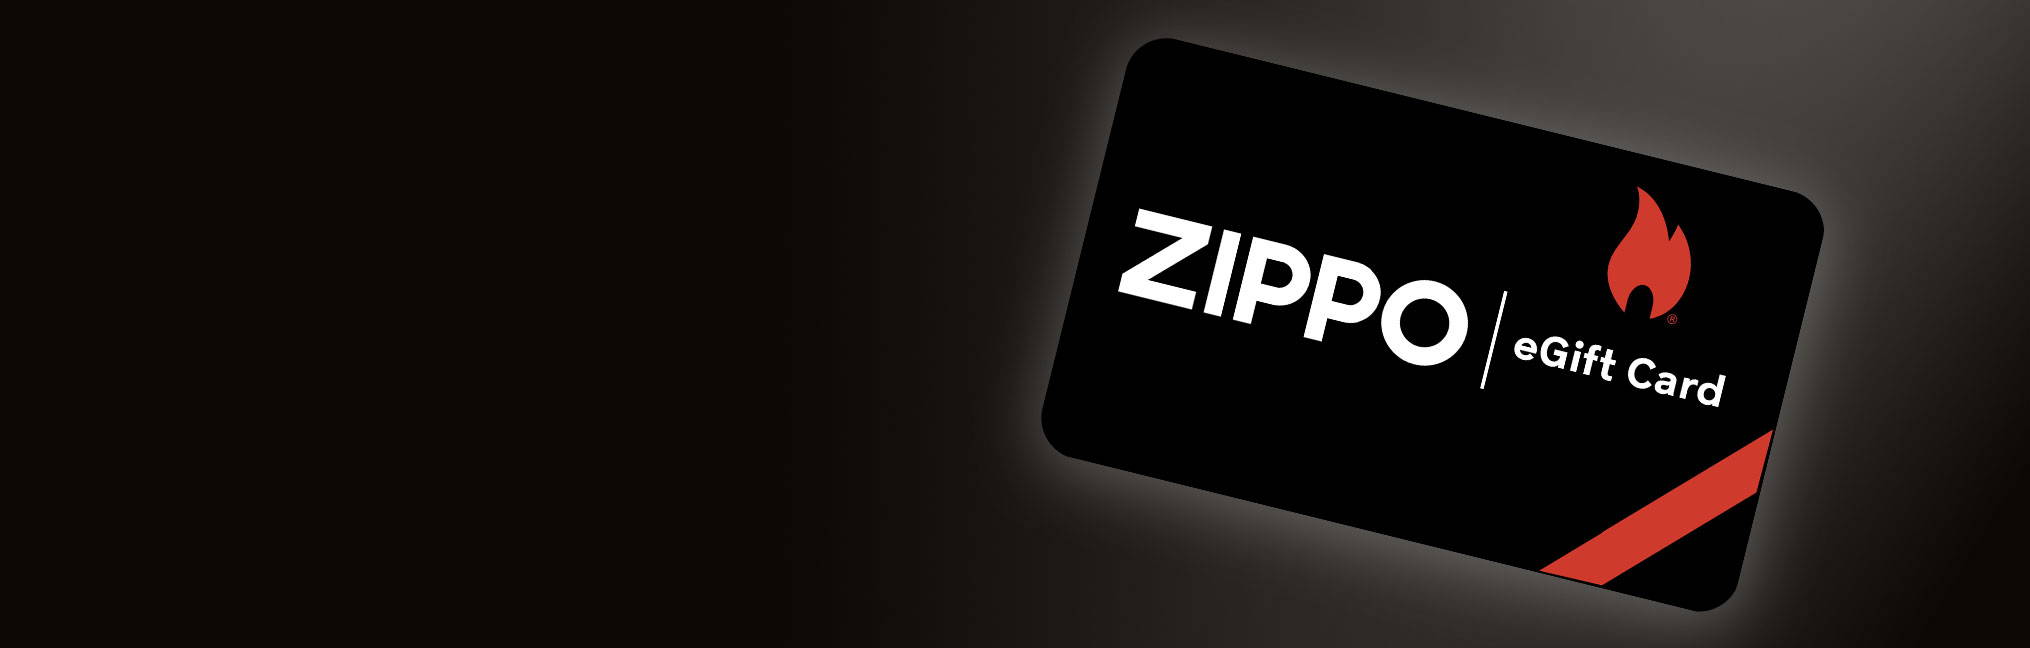 Zippo x Audacy Sweepstakes - Enter to Win a Zippo eGift Card.